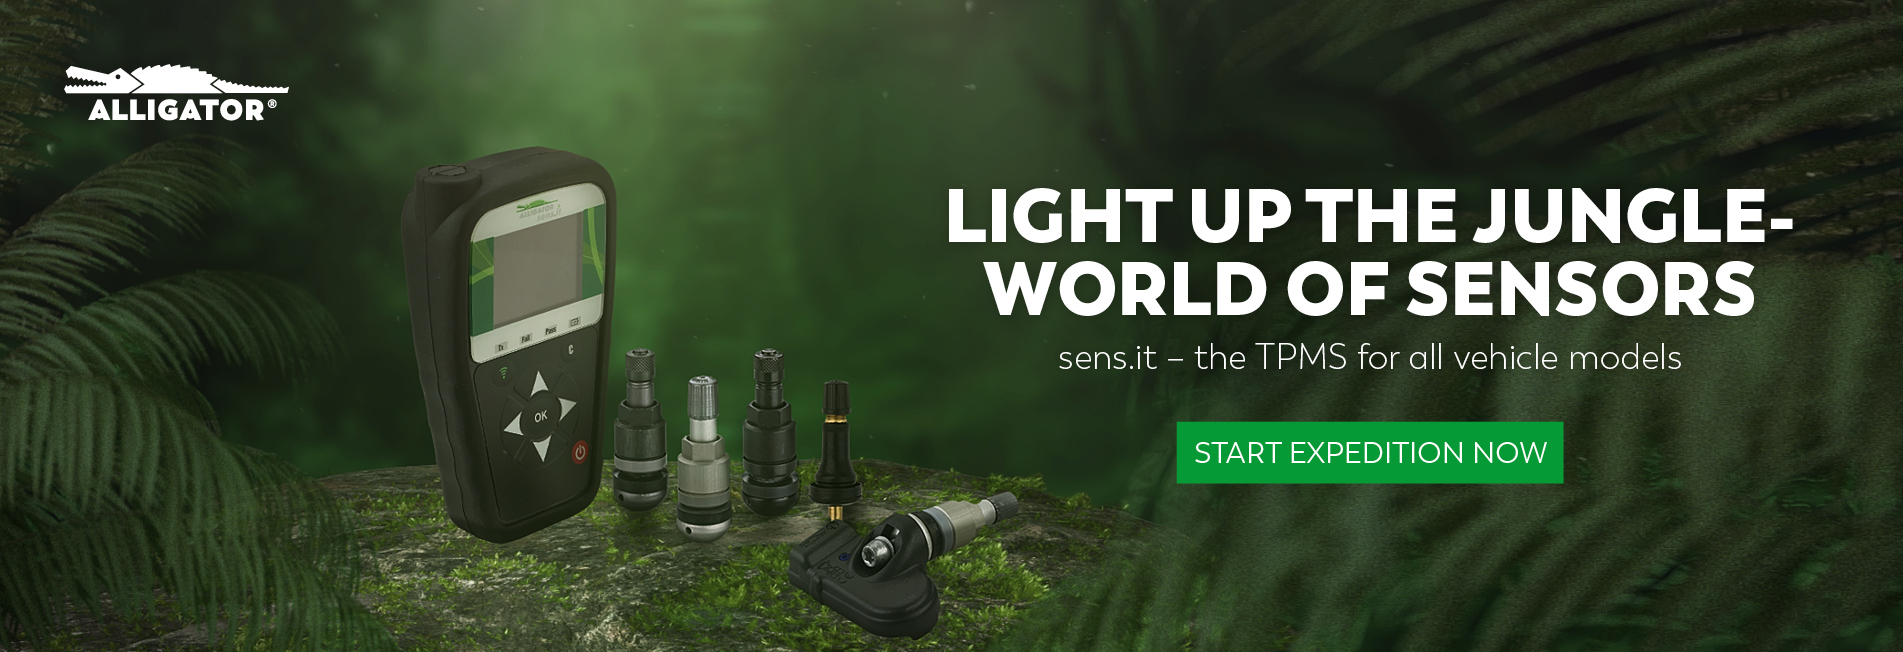 Light up the jungle-world of sensors